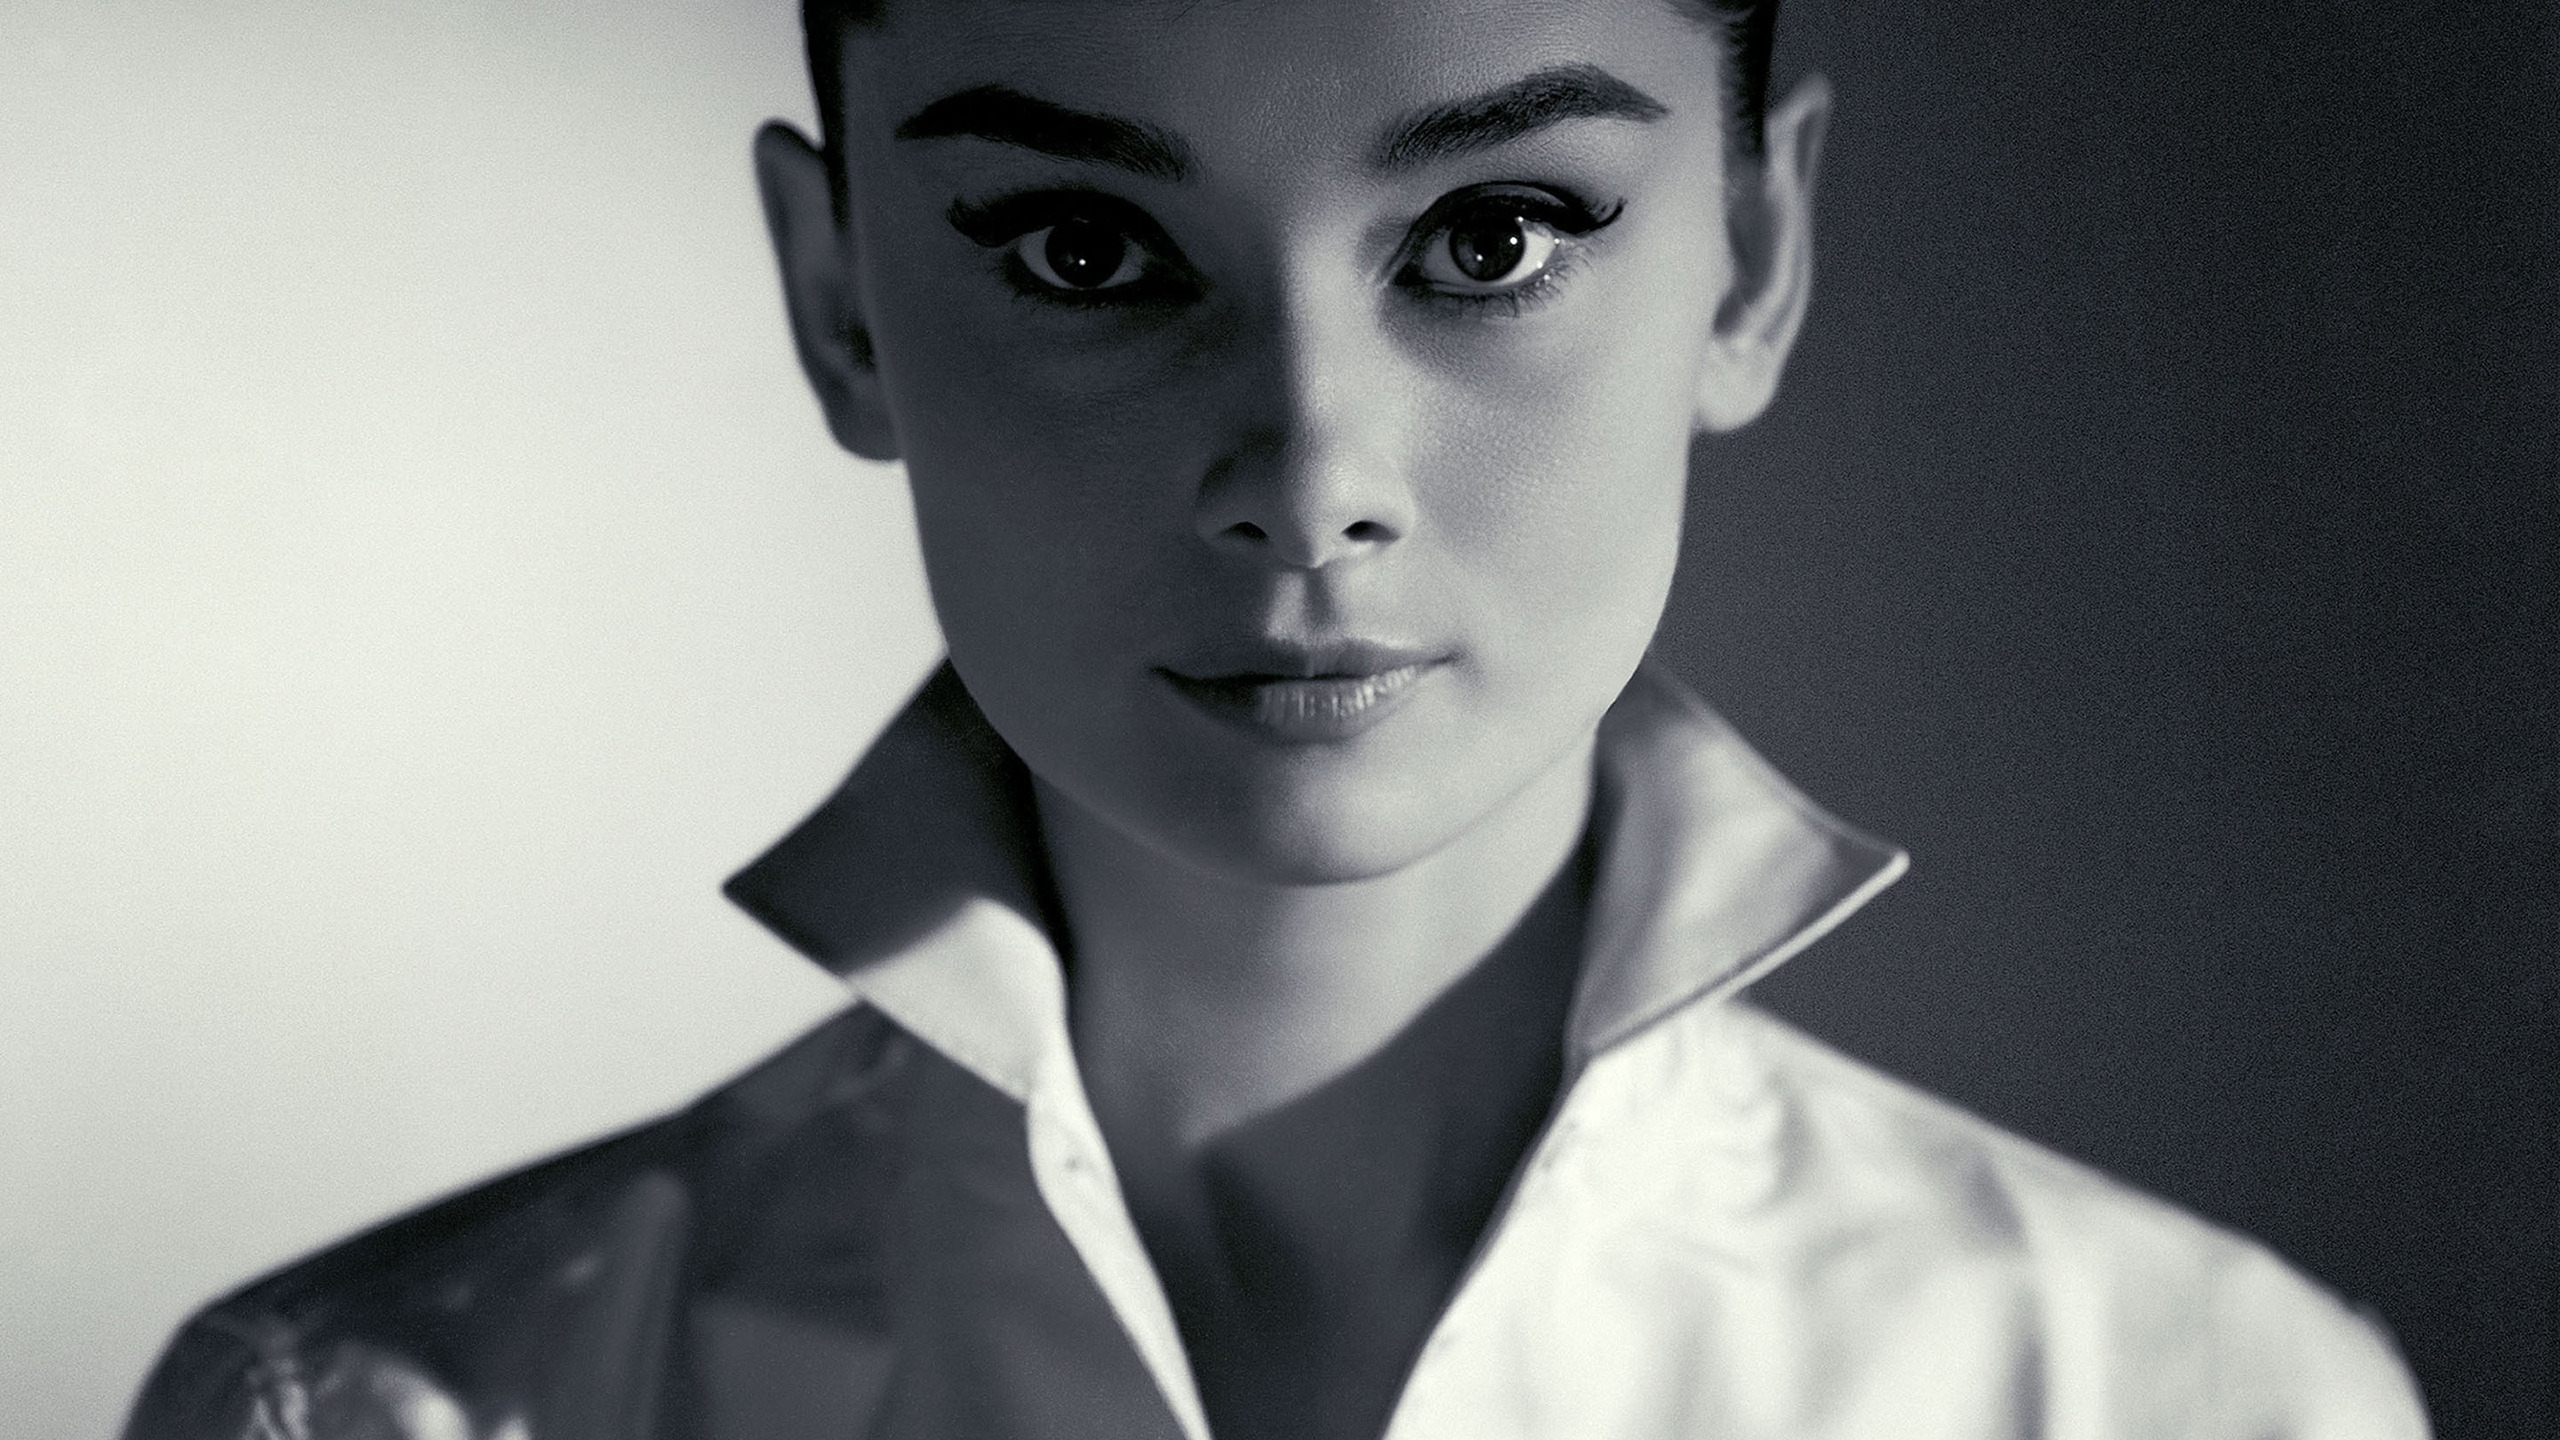 Audrey Hepburn for 2560x1440 HDTV resolution